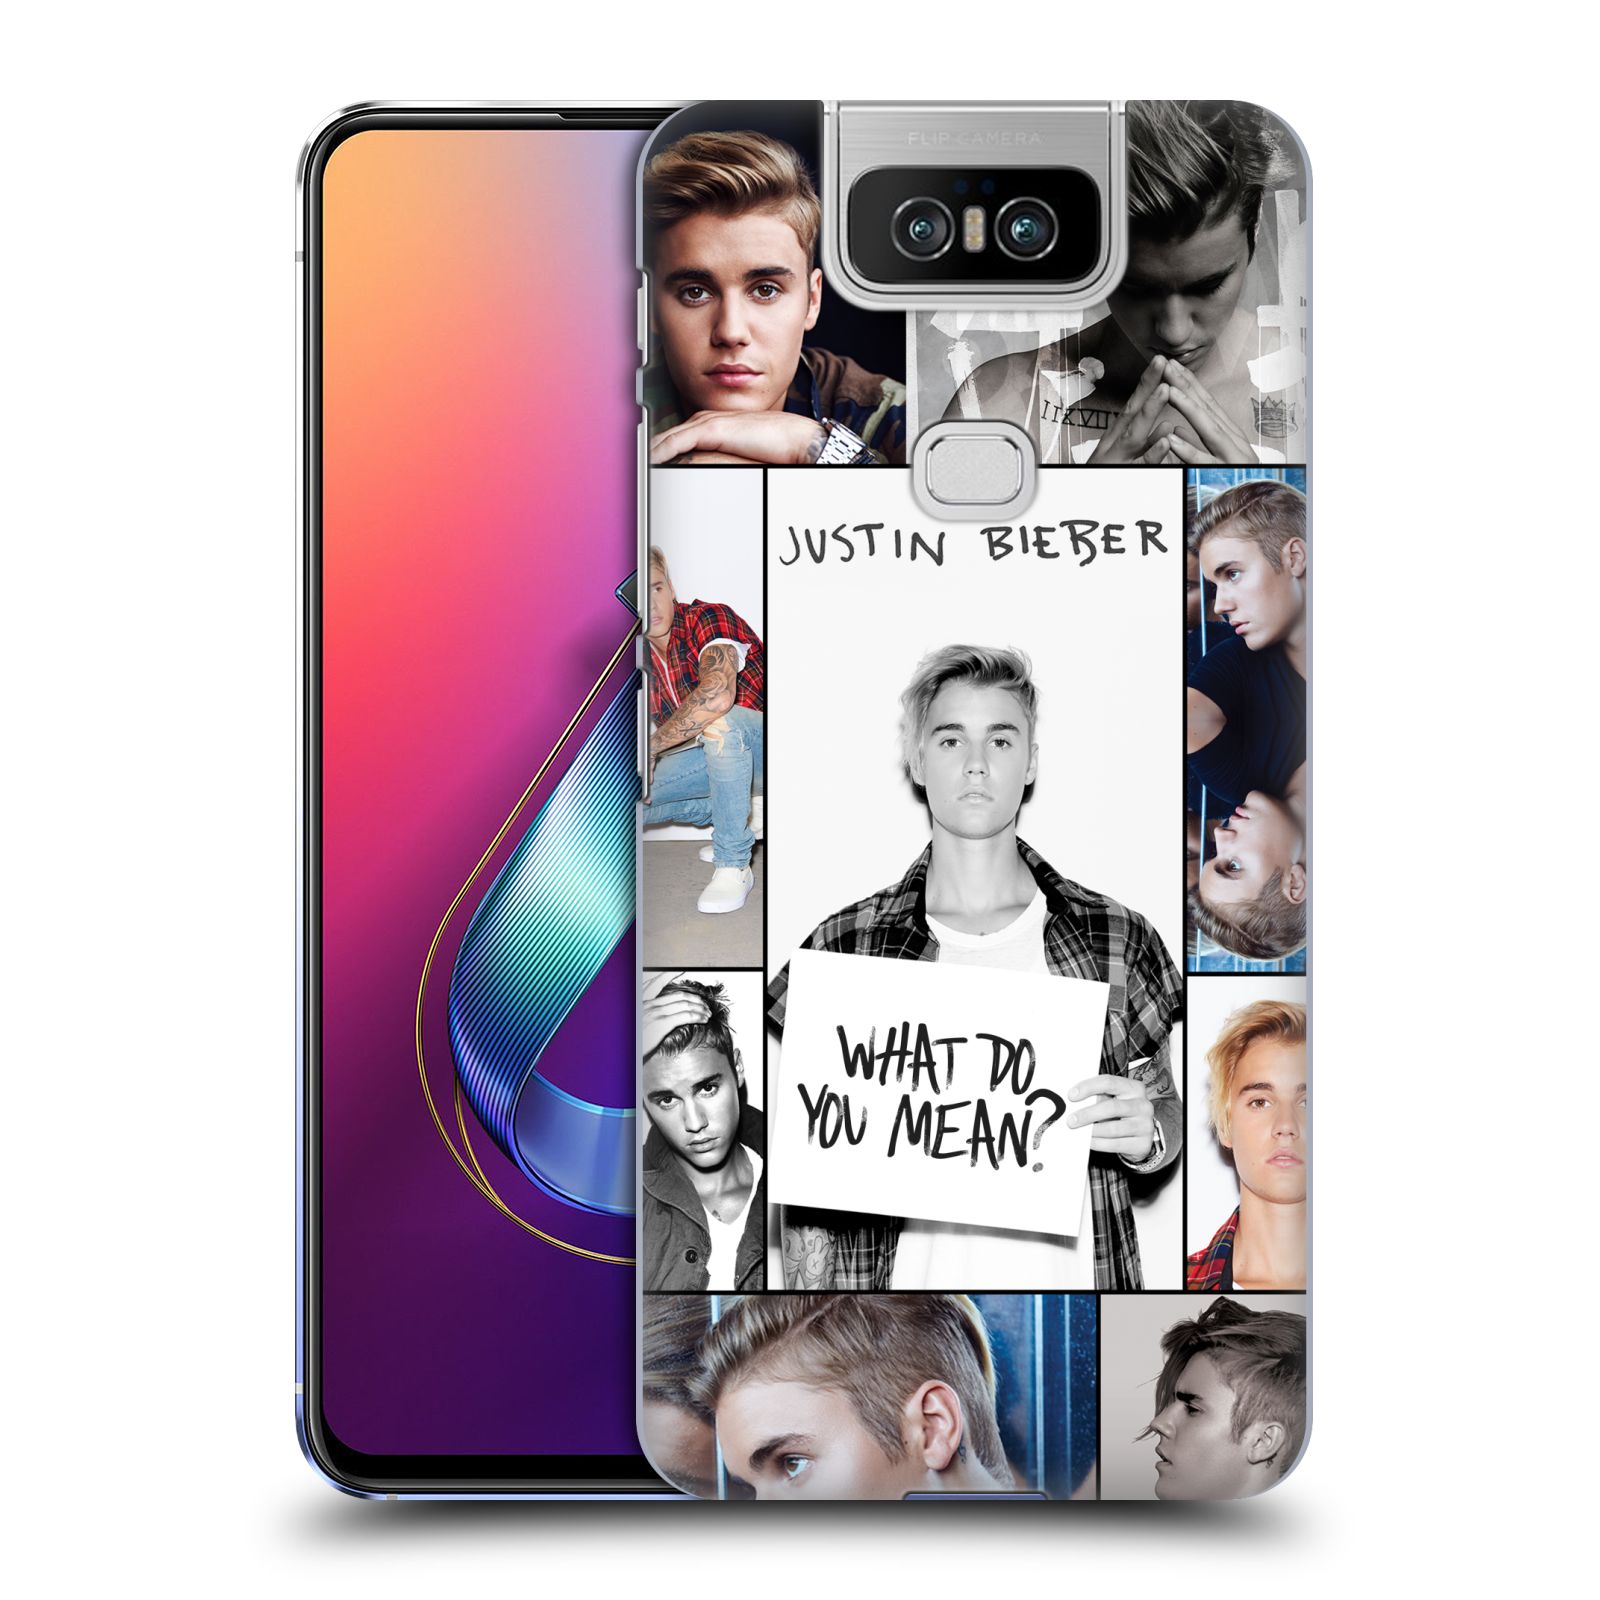 Pouzdro na mobil Asus Zenfone 6 ZS630KL - HEAD CASE - Justin Bieber foto Purpose malé fotky